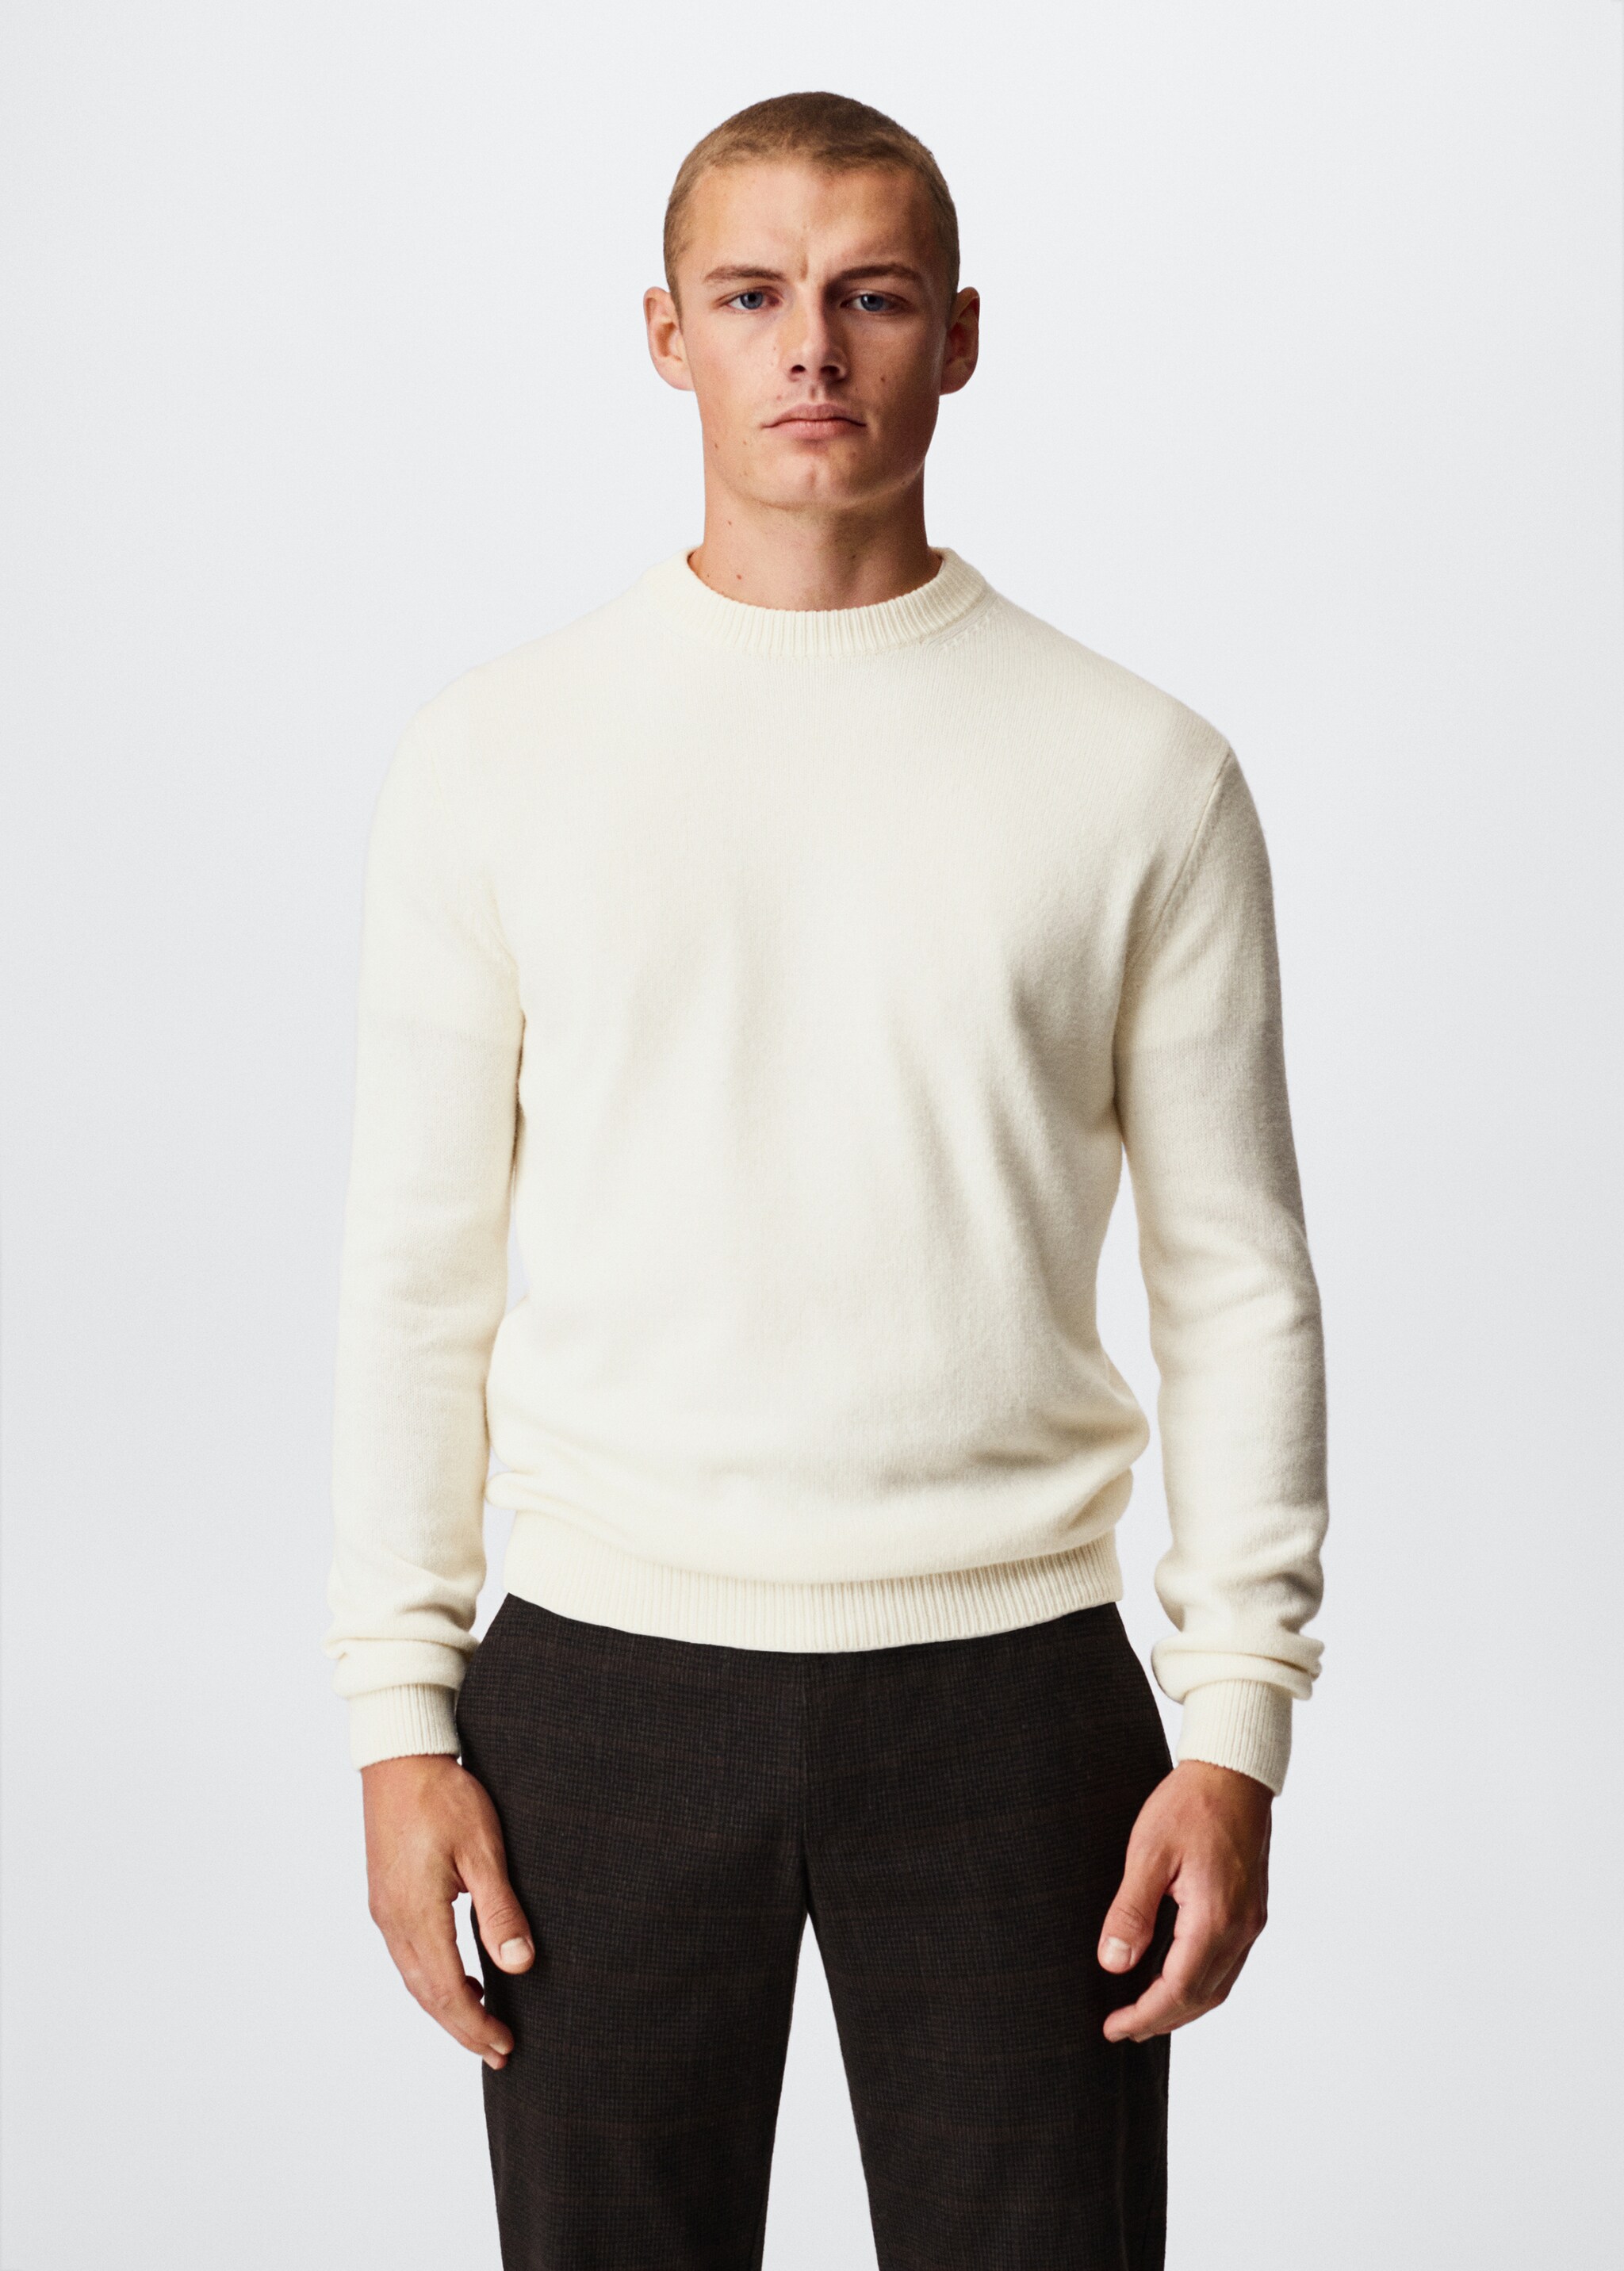 Cashmere wool sweater - Medium plane